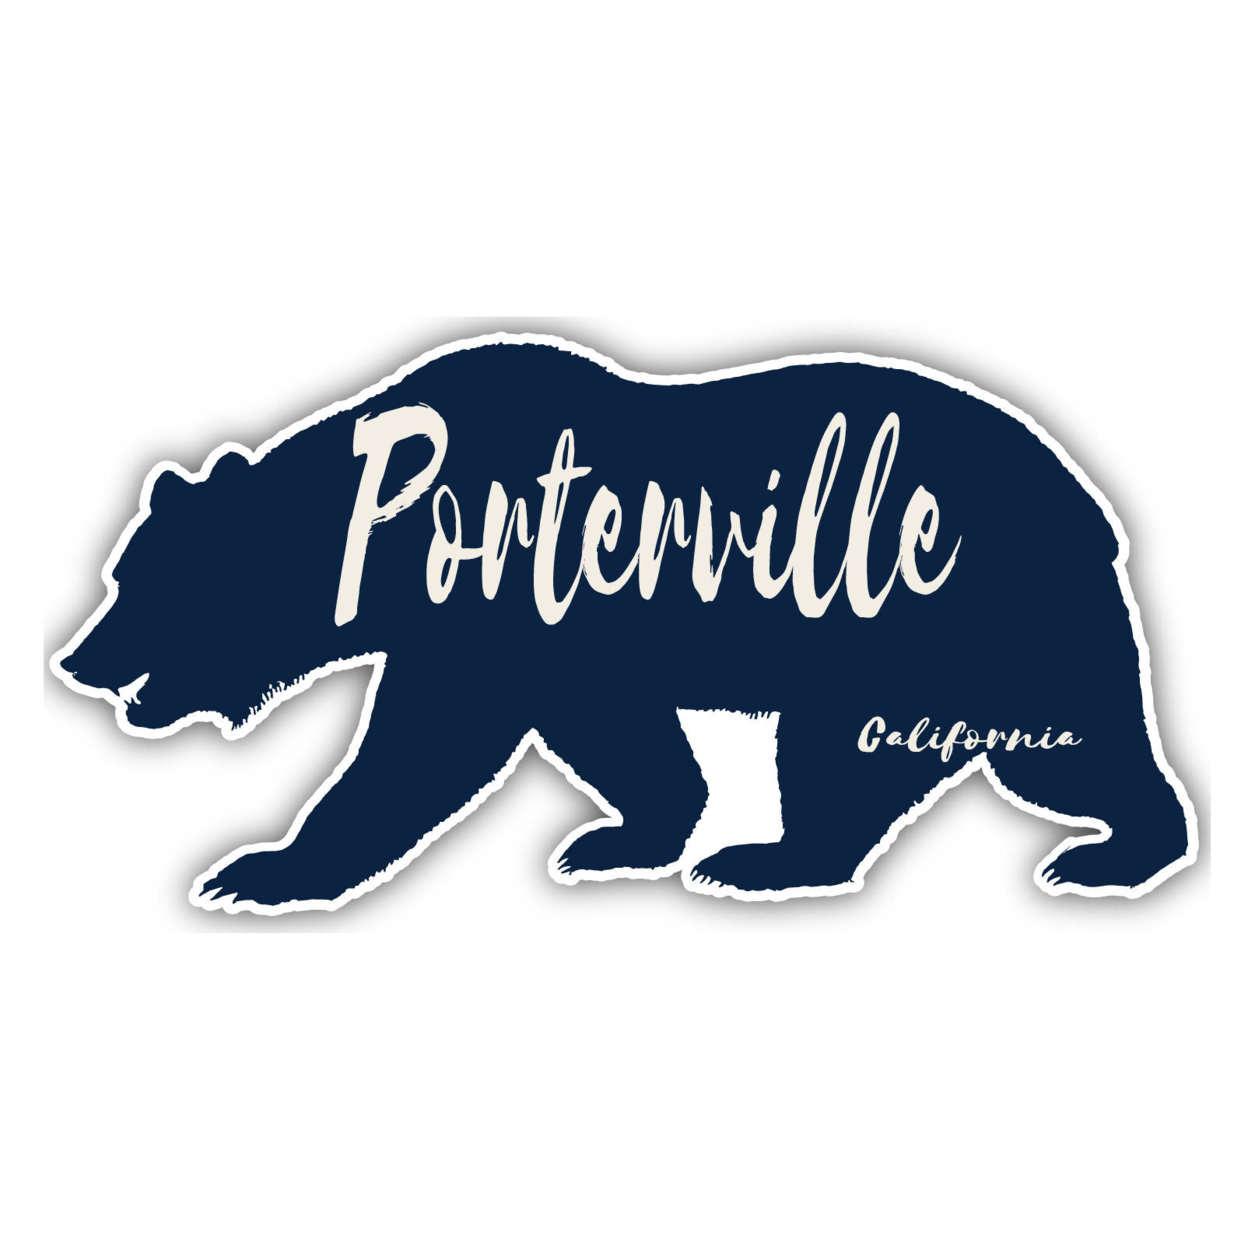 Porterville California Souvenir Decorative Stickers (Choose Theme And Size) - Single Unit, 2-Inch, Adventures Awaits